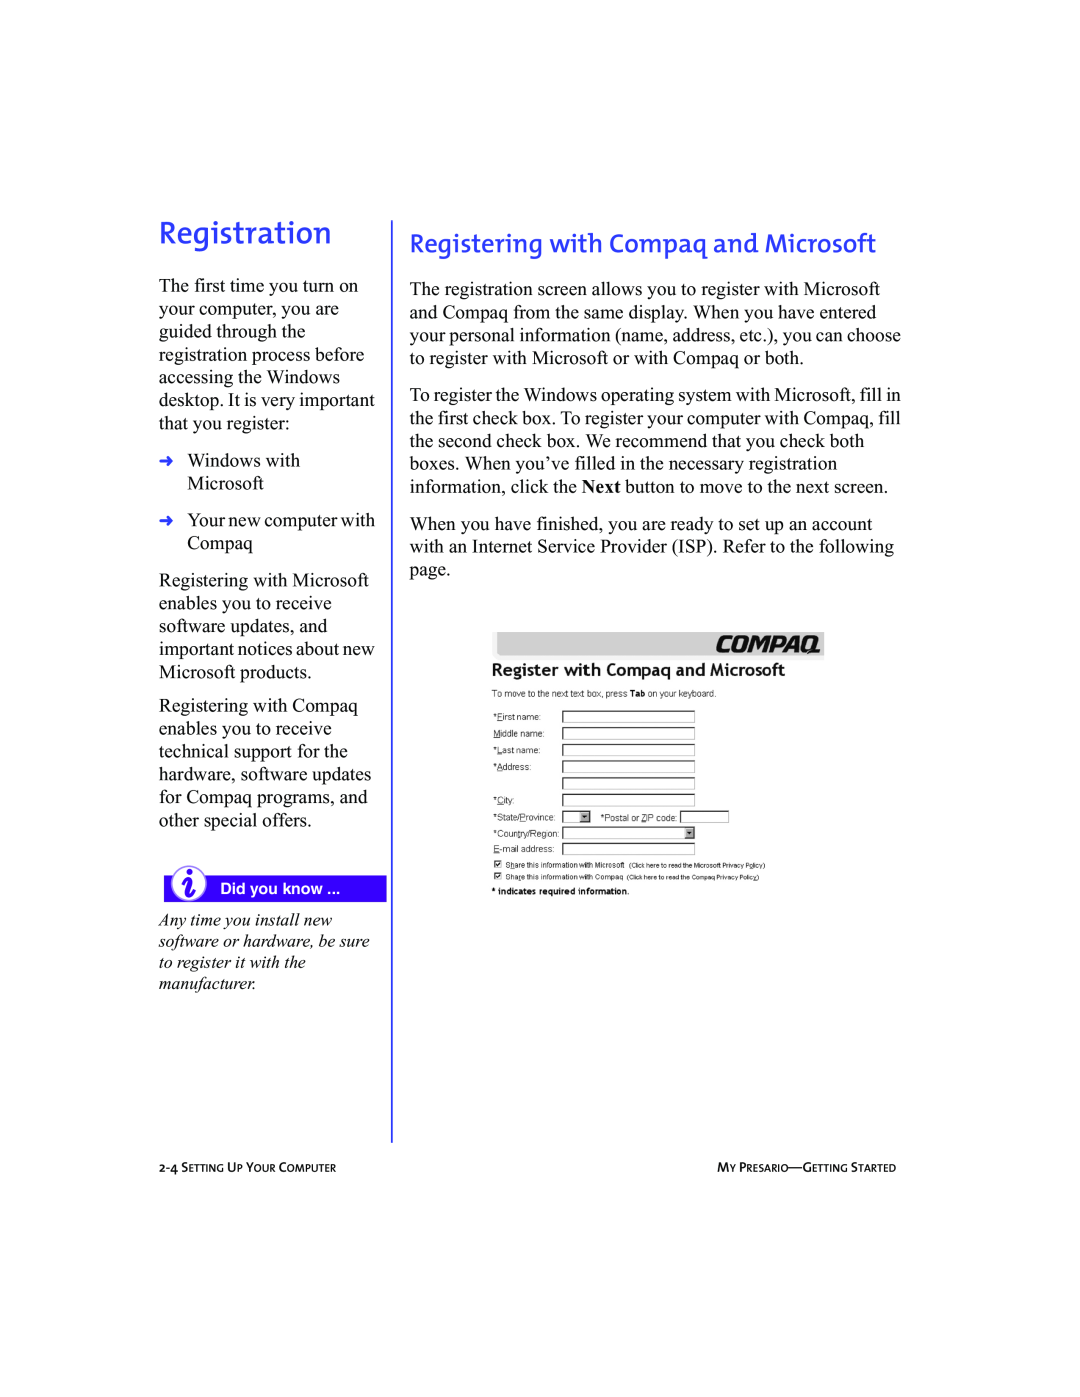 Compaq 5BW474 manual Registration, Registering with Compaq and Microsoft 